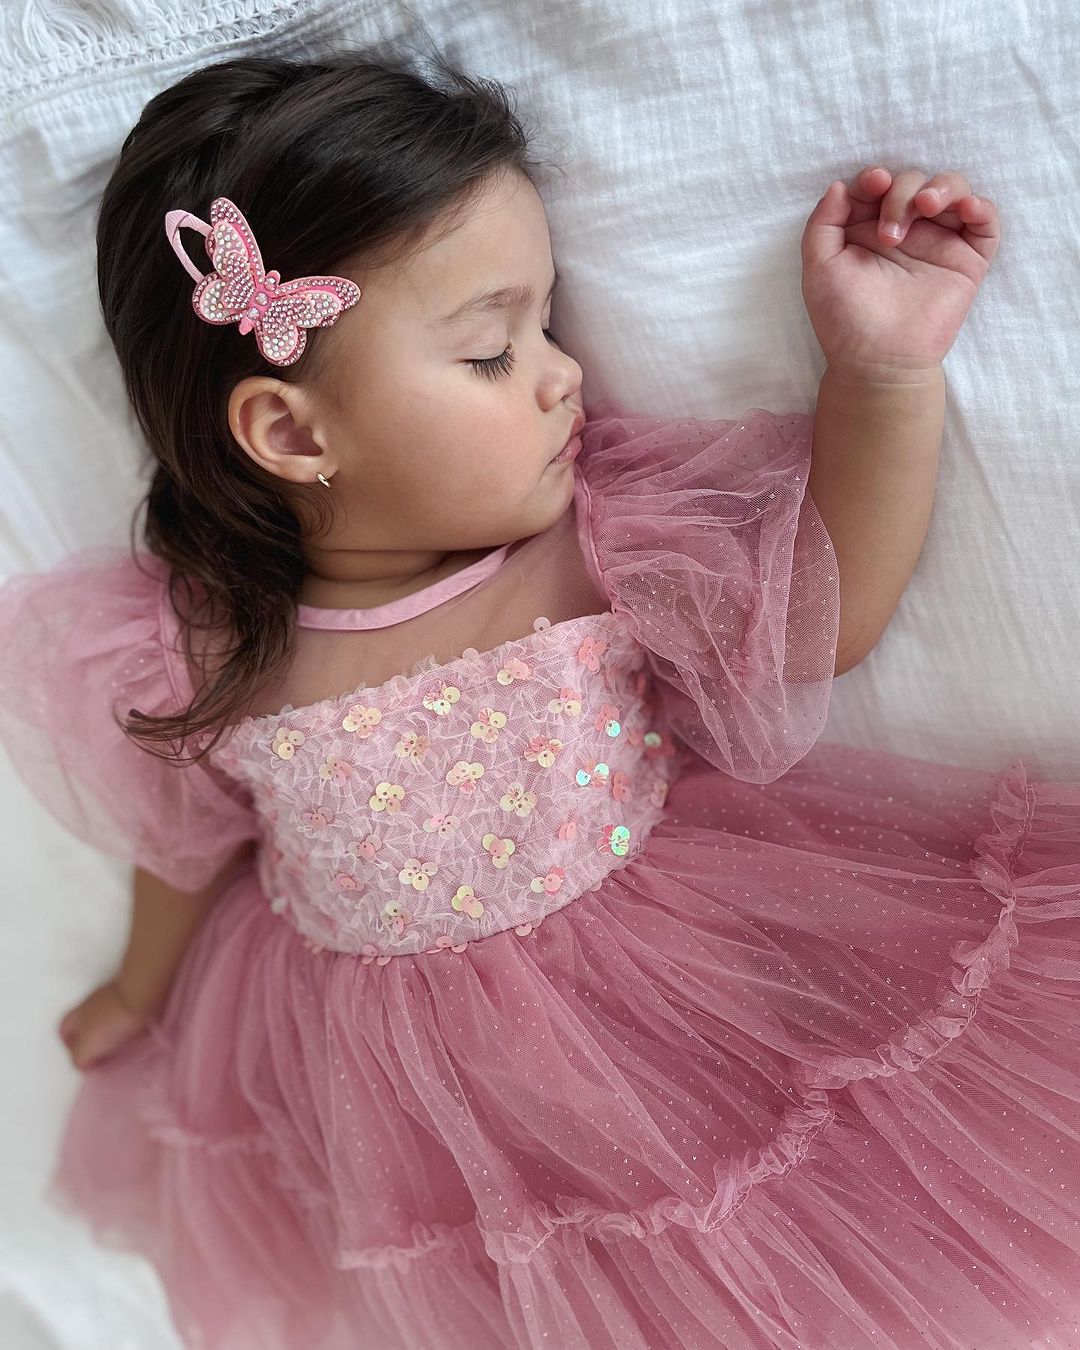 Vestido Infantil Rosa Tule e Brilhos